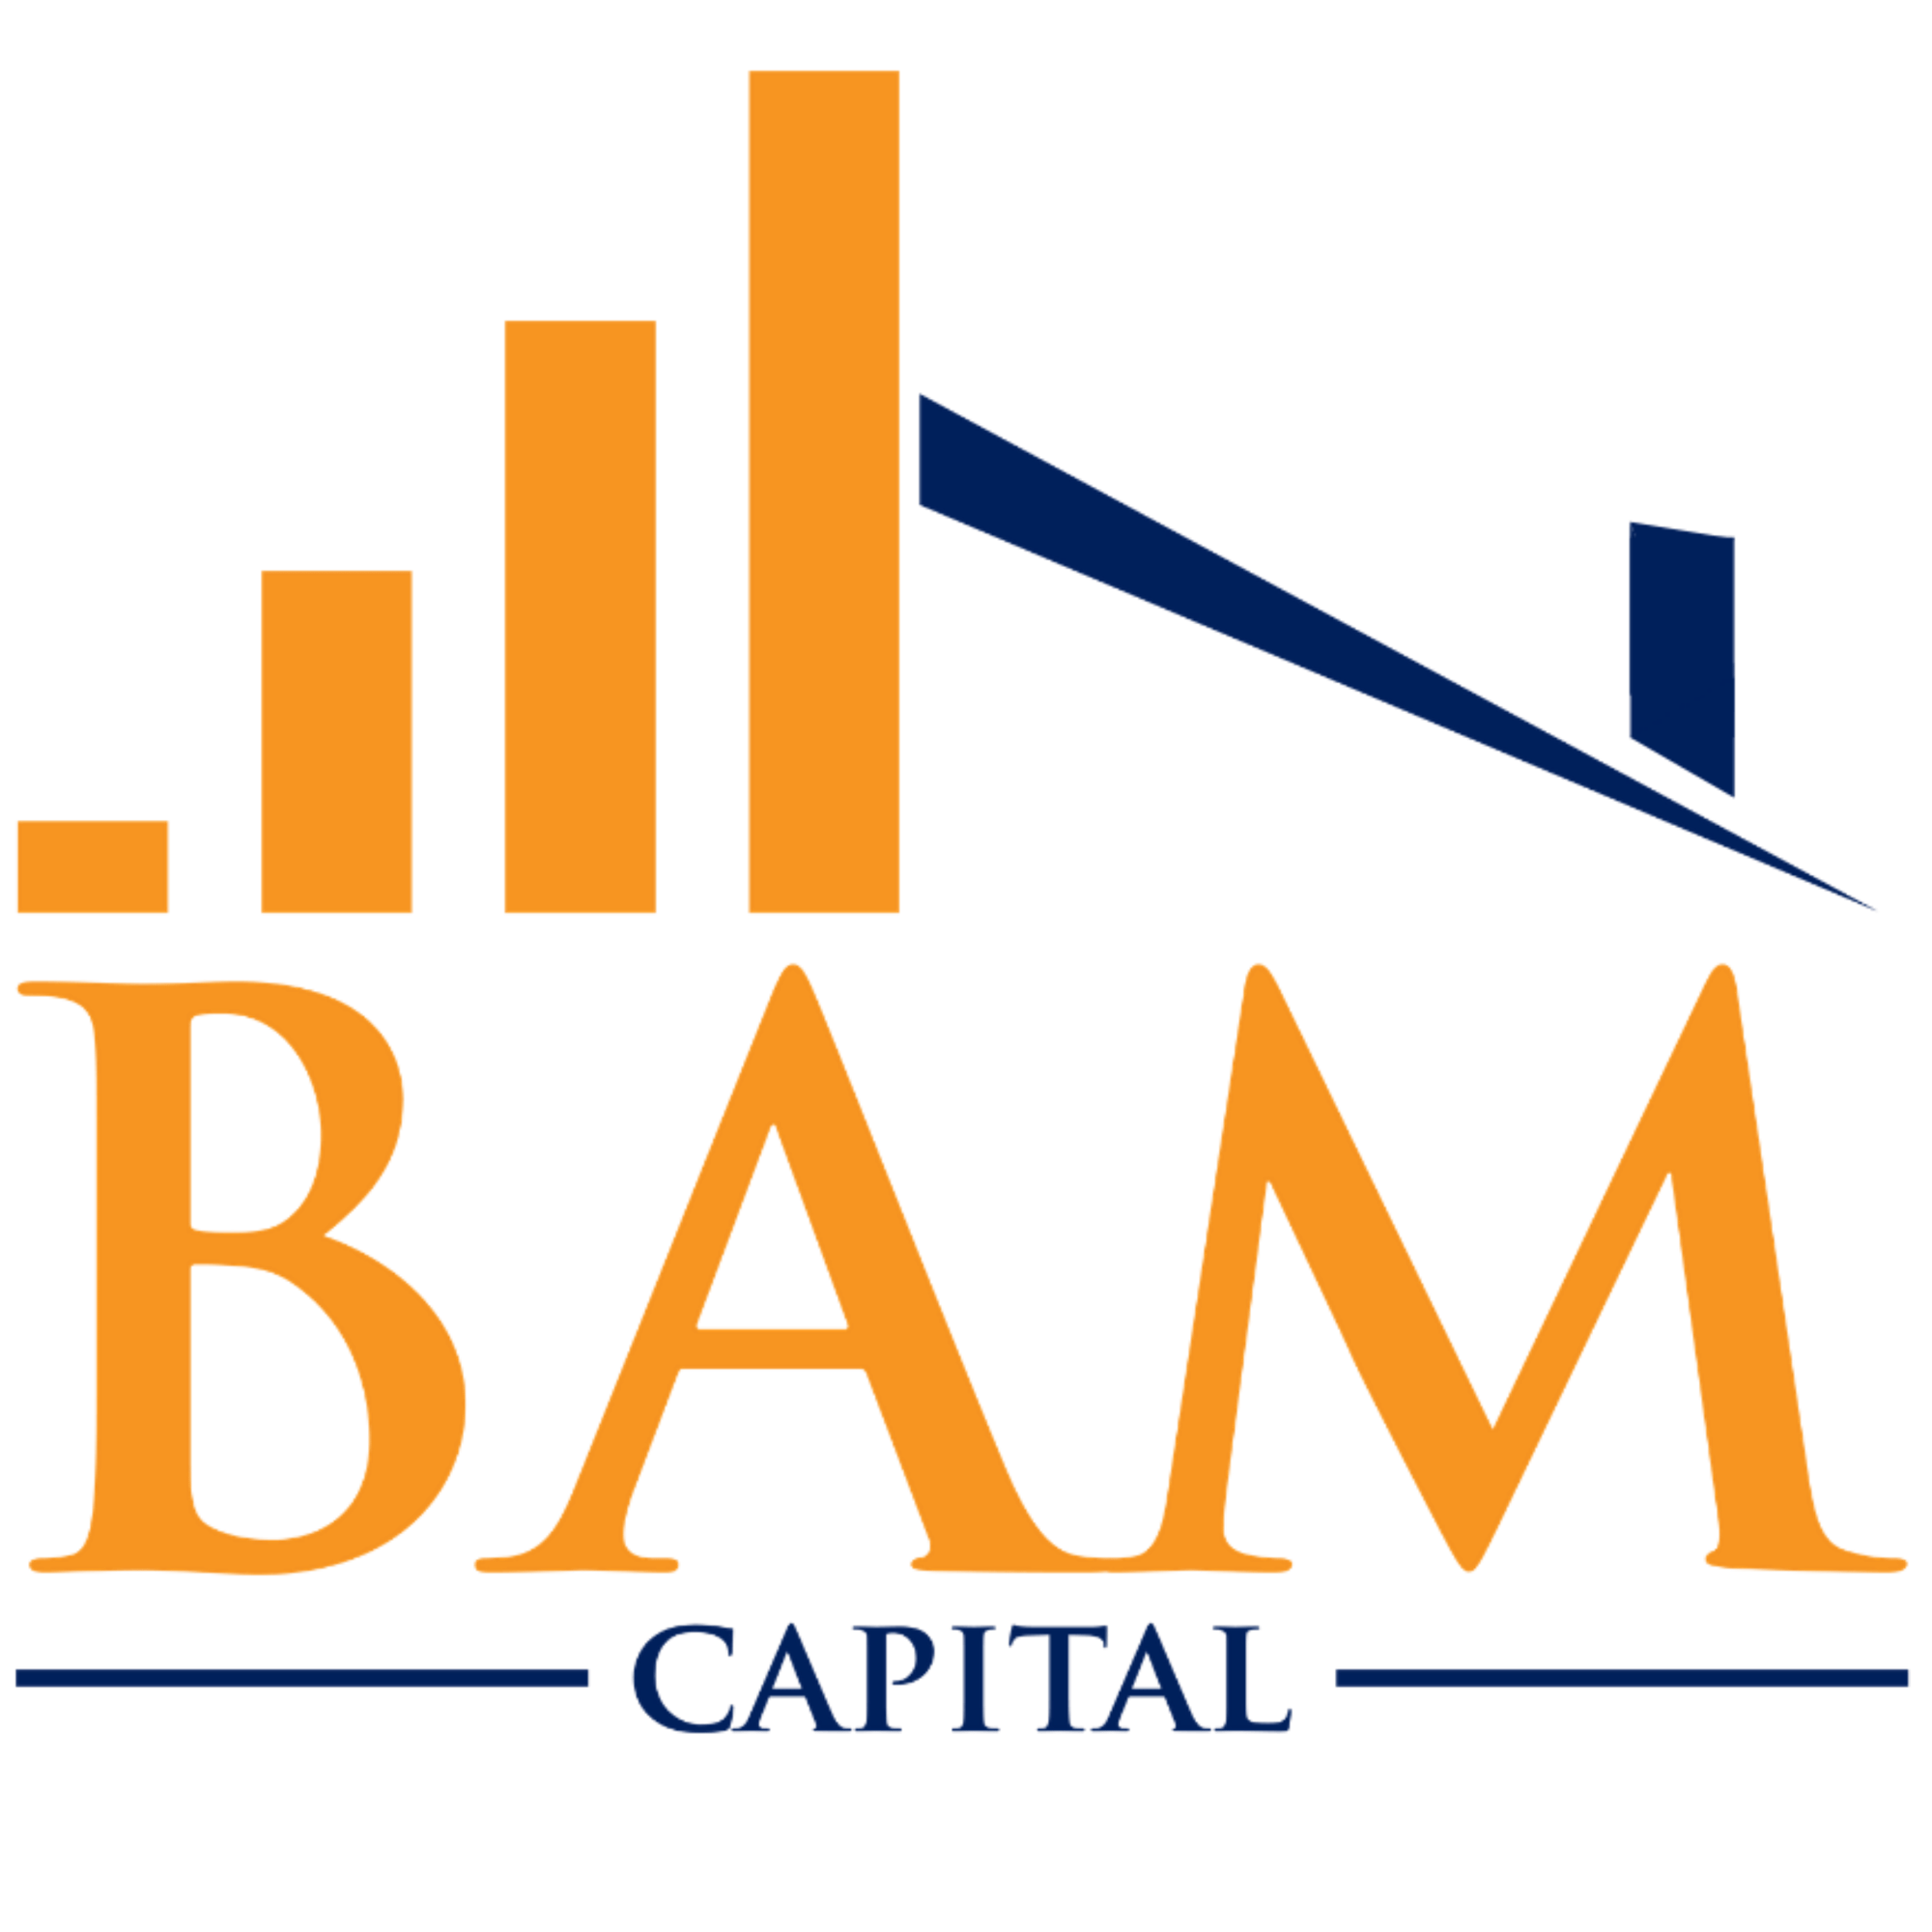 BAM Capital Full Color